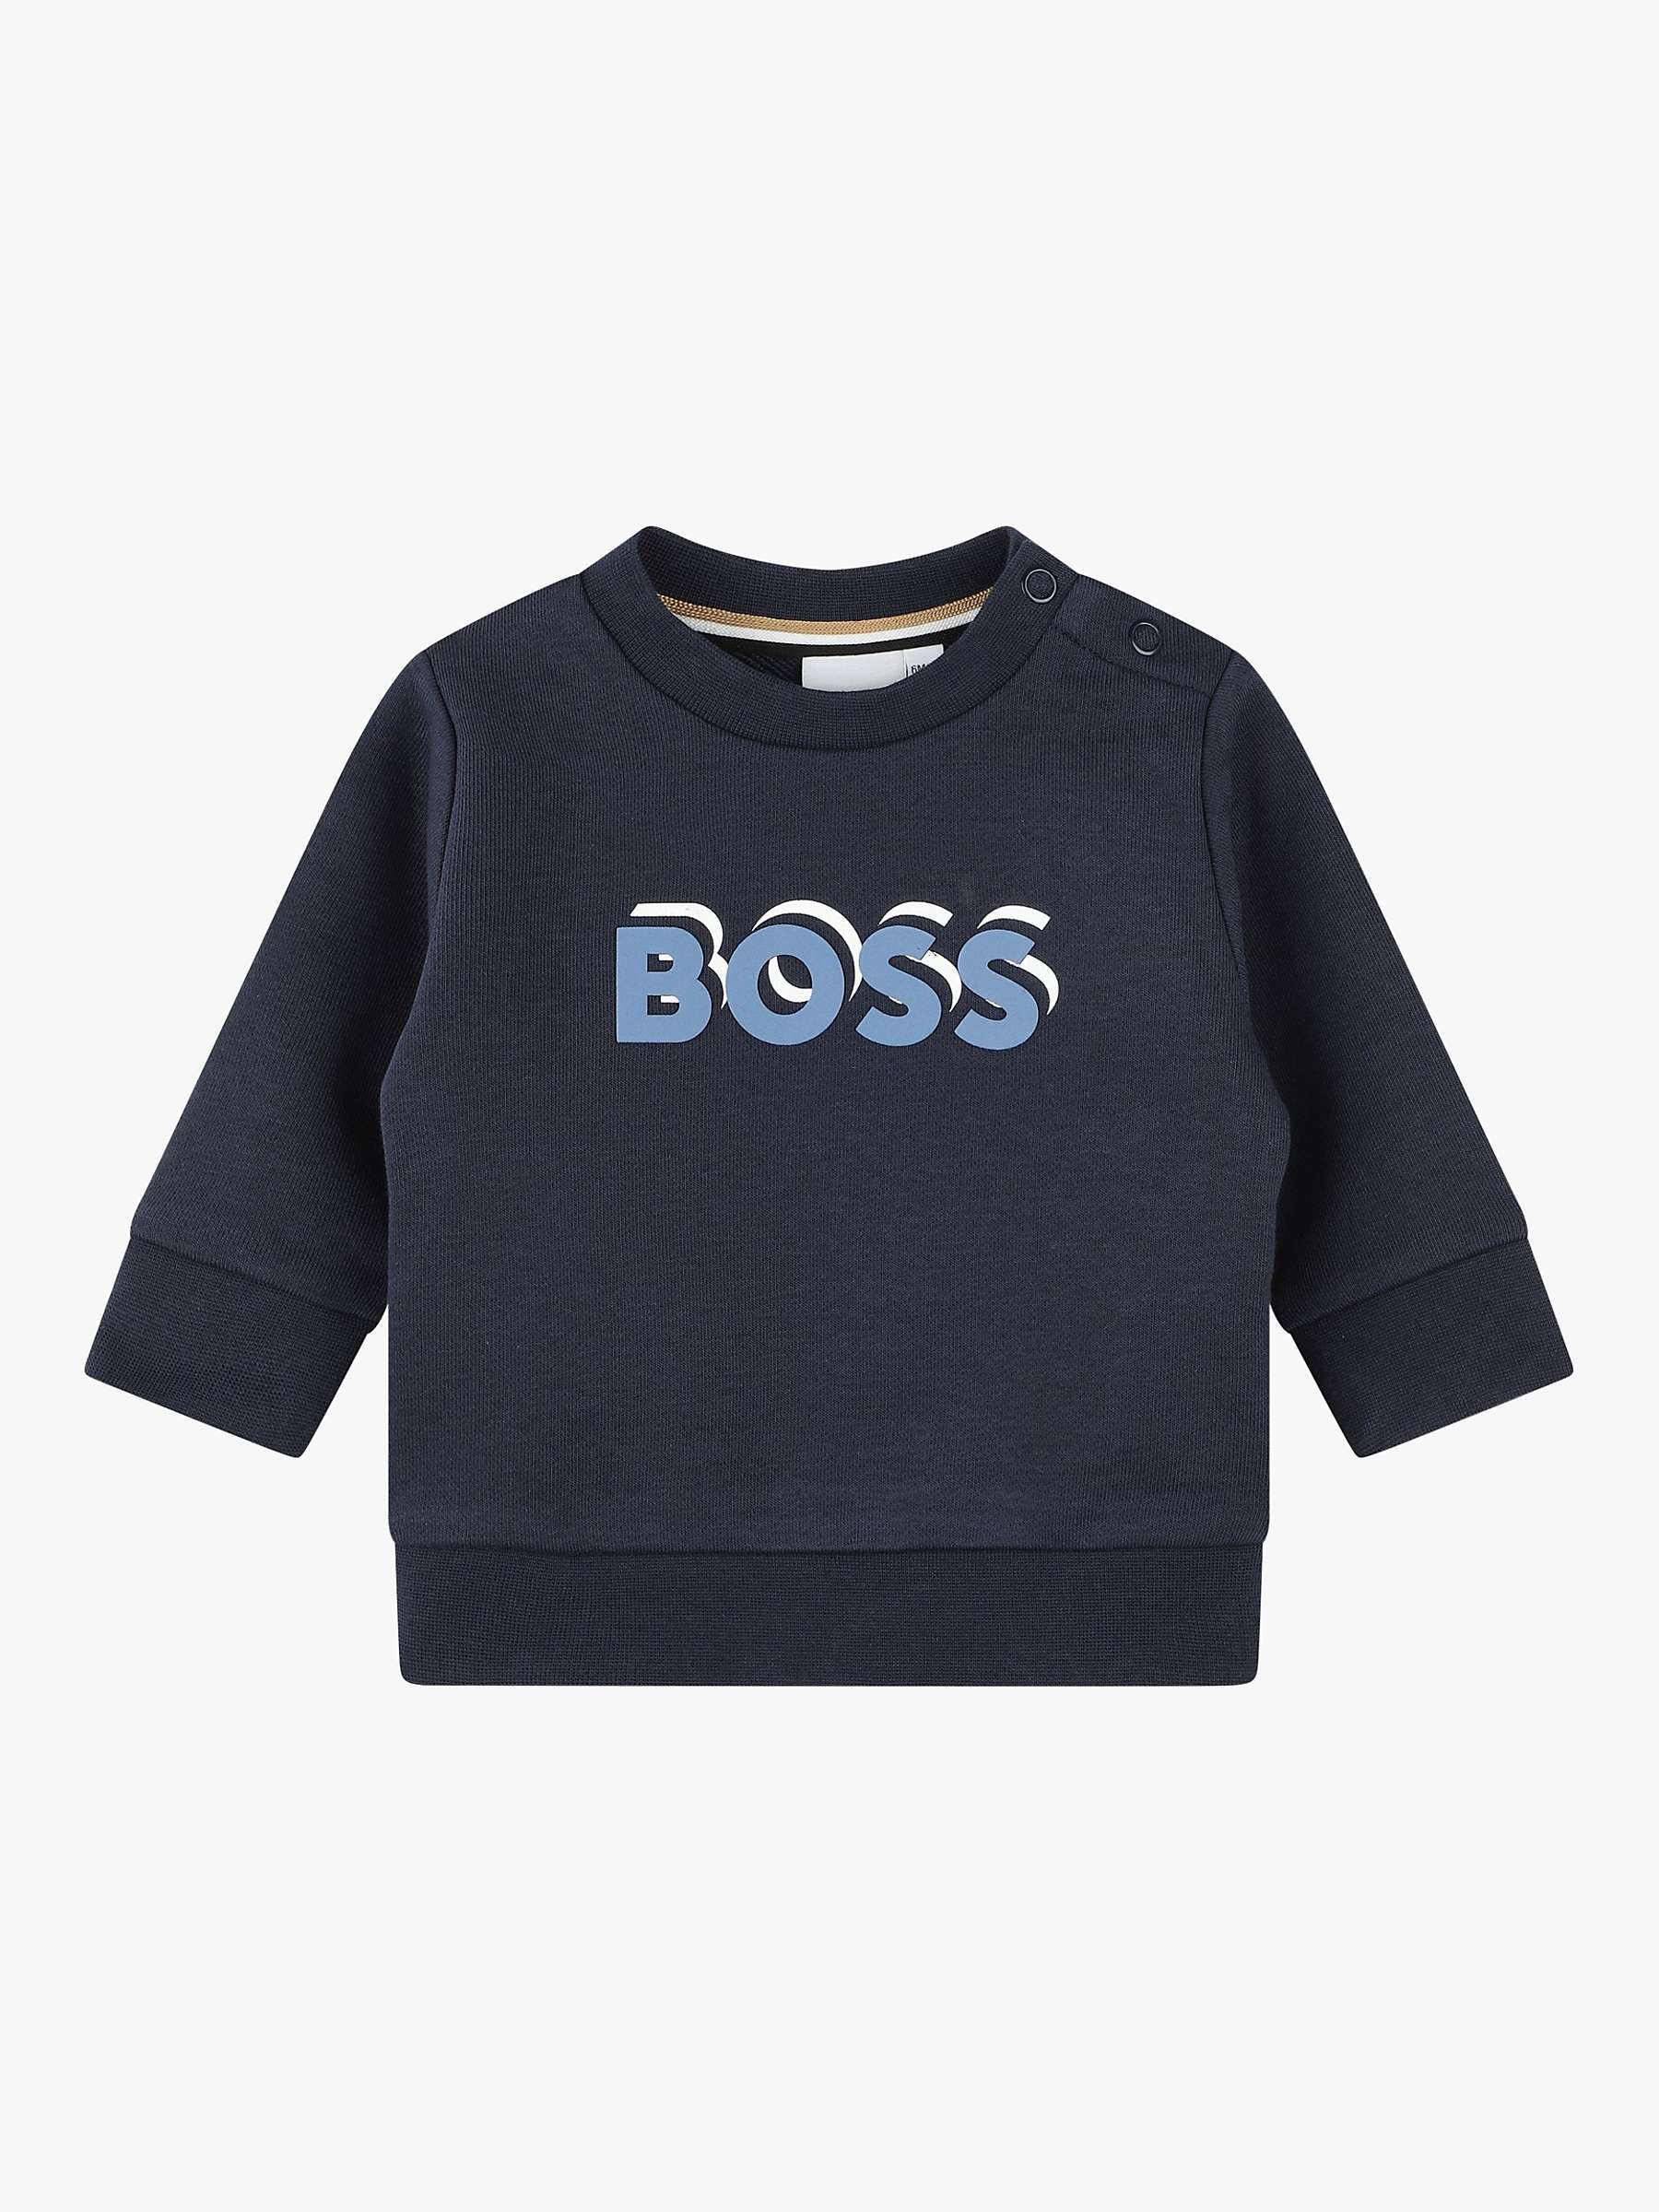 Buy HUGO BOSS BOSS Baby French Terry Sweatshirt, Navy Online at johnlewis.com